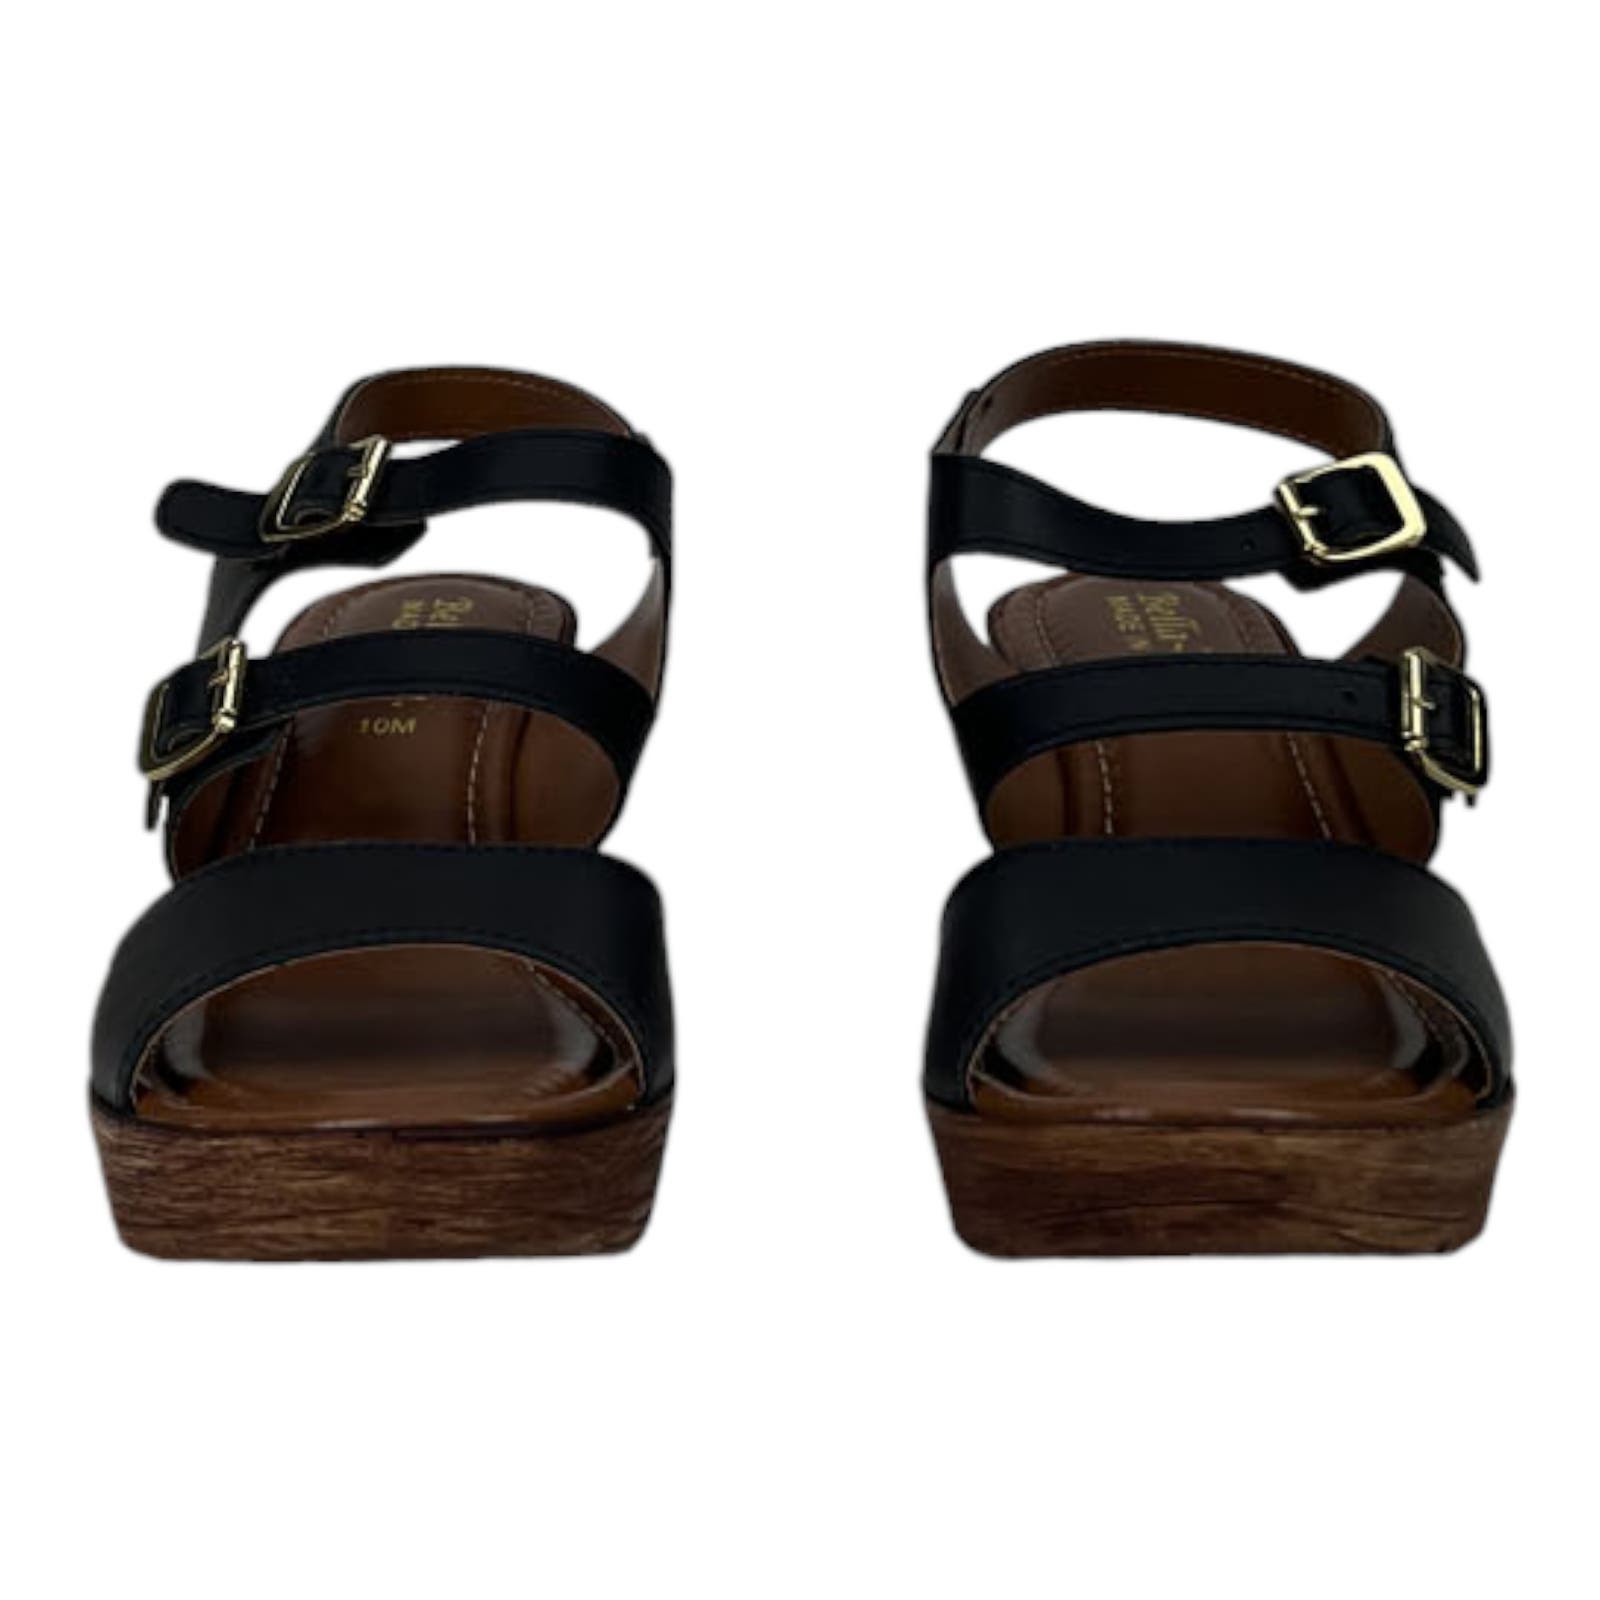 Bella Vita Women US 10 Leather Sandals Open Toe Casual Black Slingback